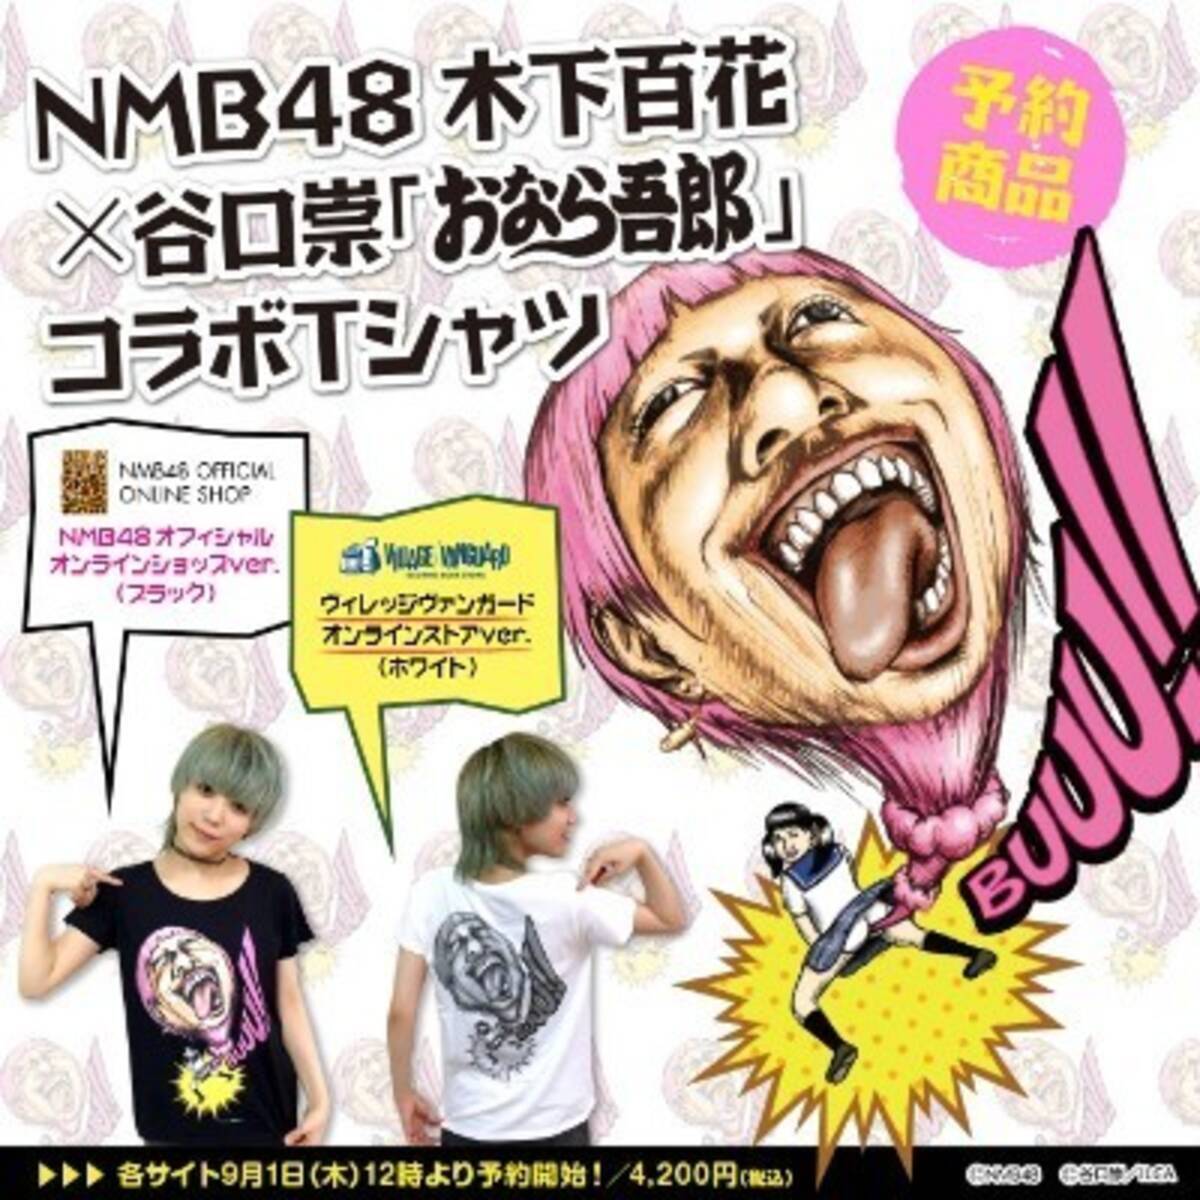 Nmb48の木下百花 舌出し強烈キャラに おなら吾郎 コラボtシャツが絶賛予約受付中 16年9月7日 エキサイトニュース